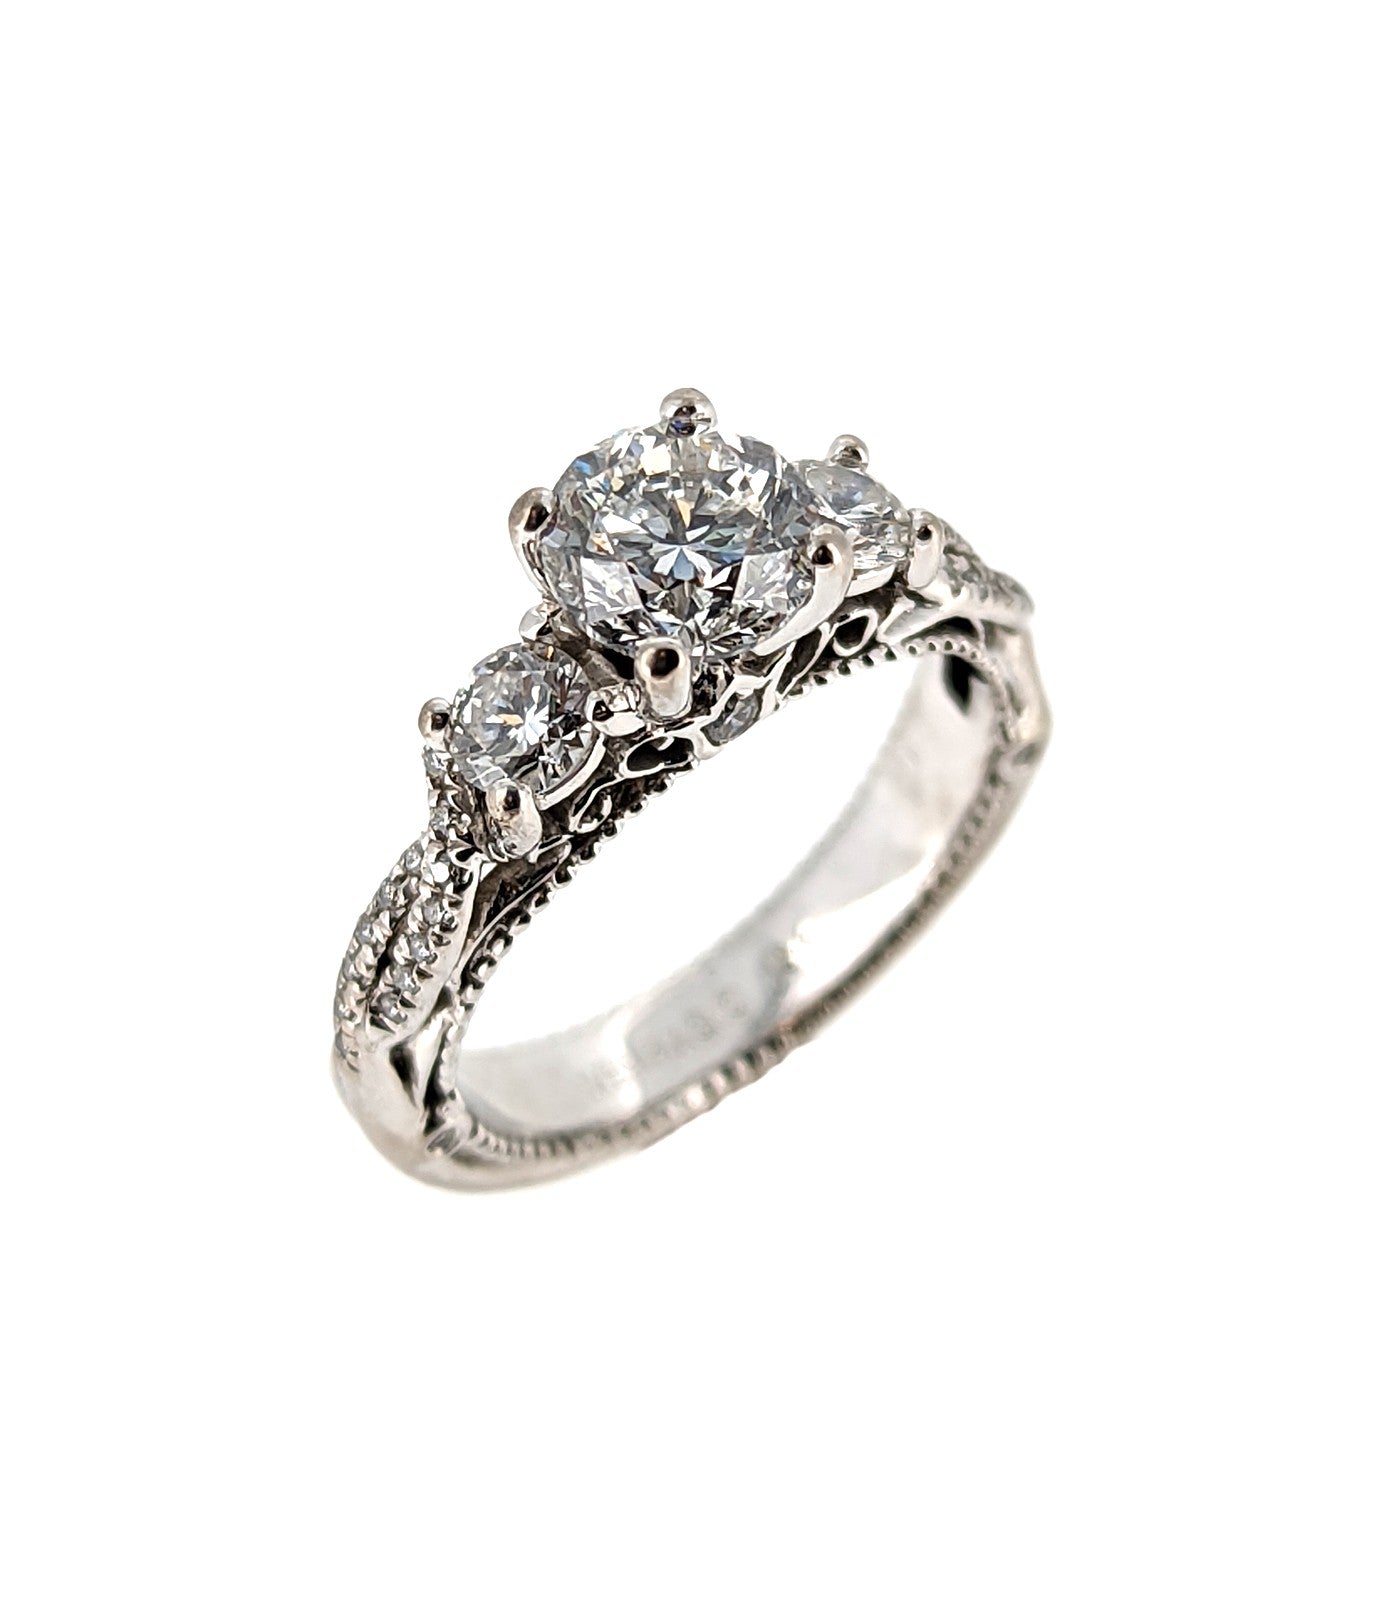 Verragio 18K White Gold 1 Carat Diamond Engagement Ring